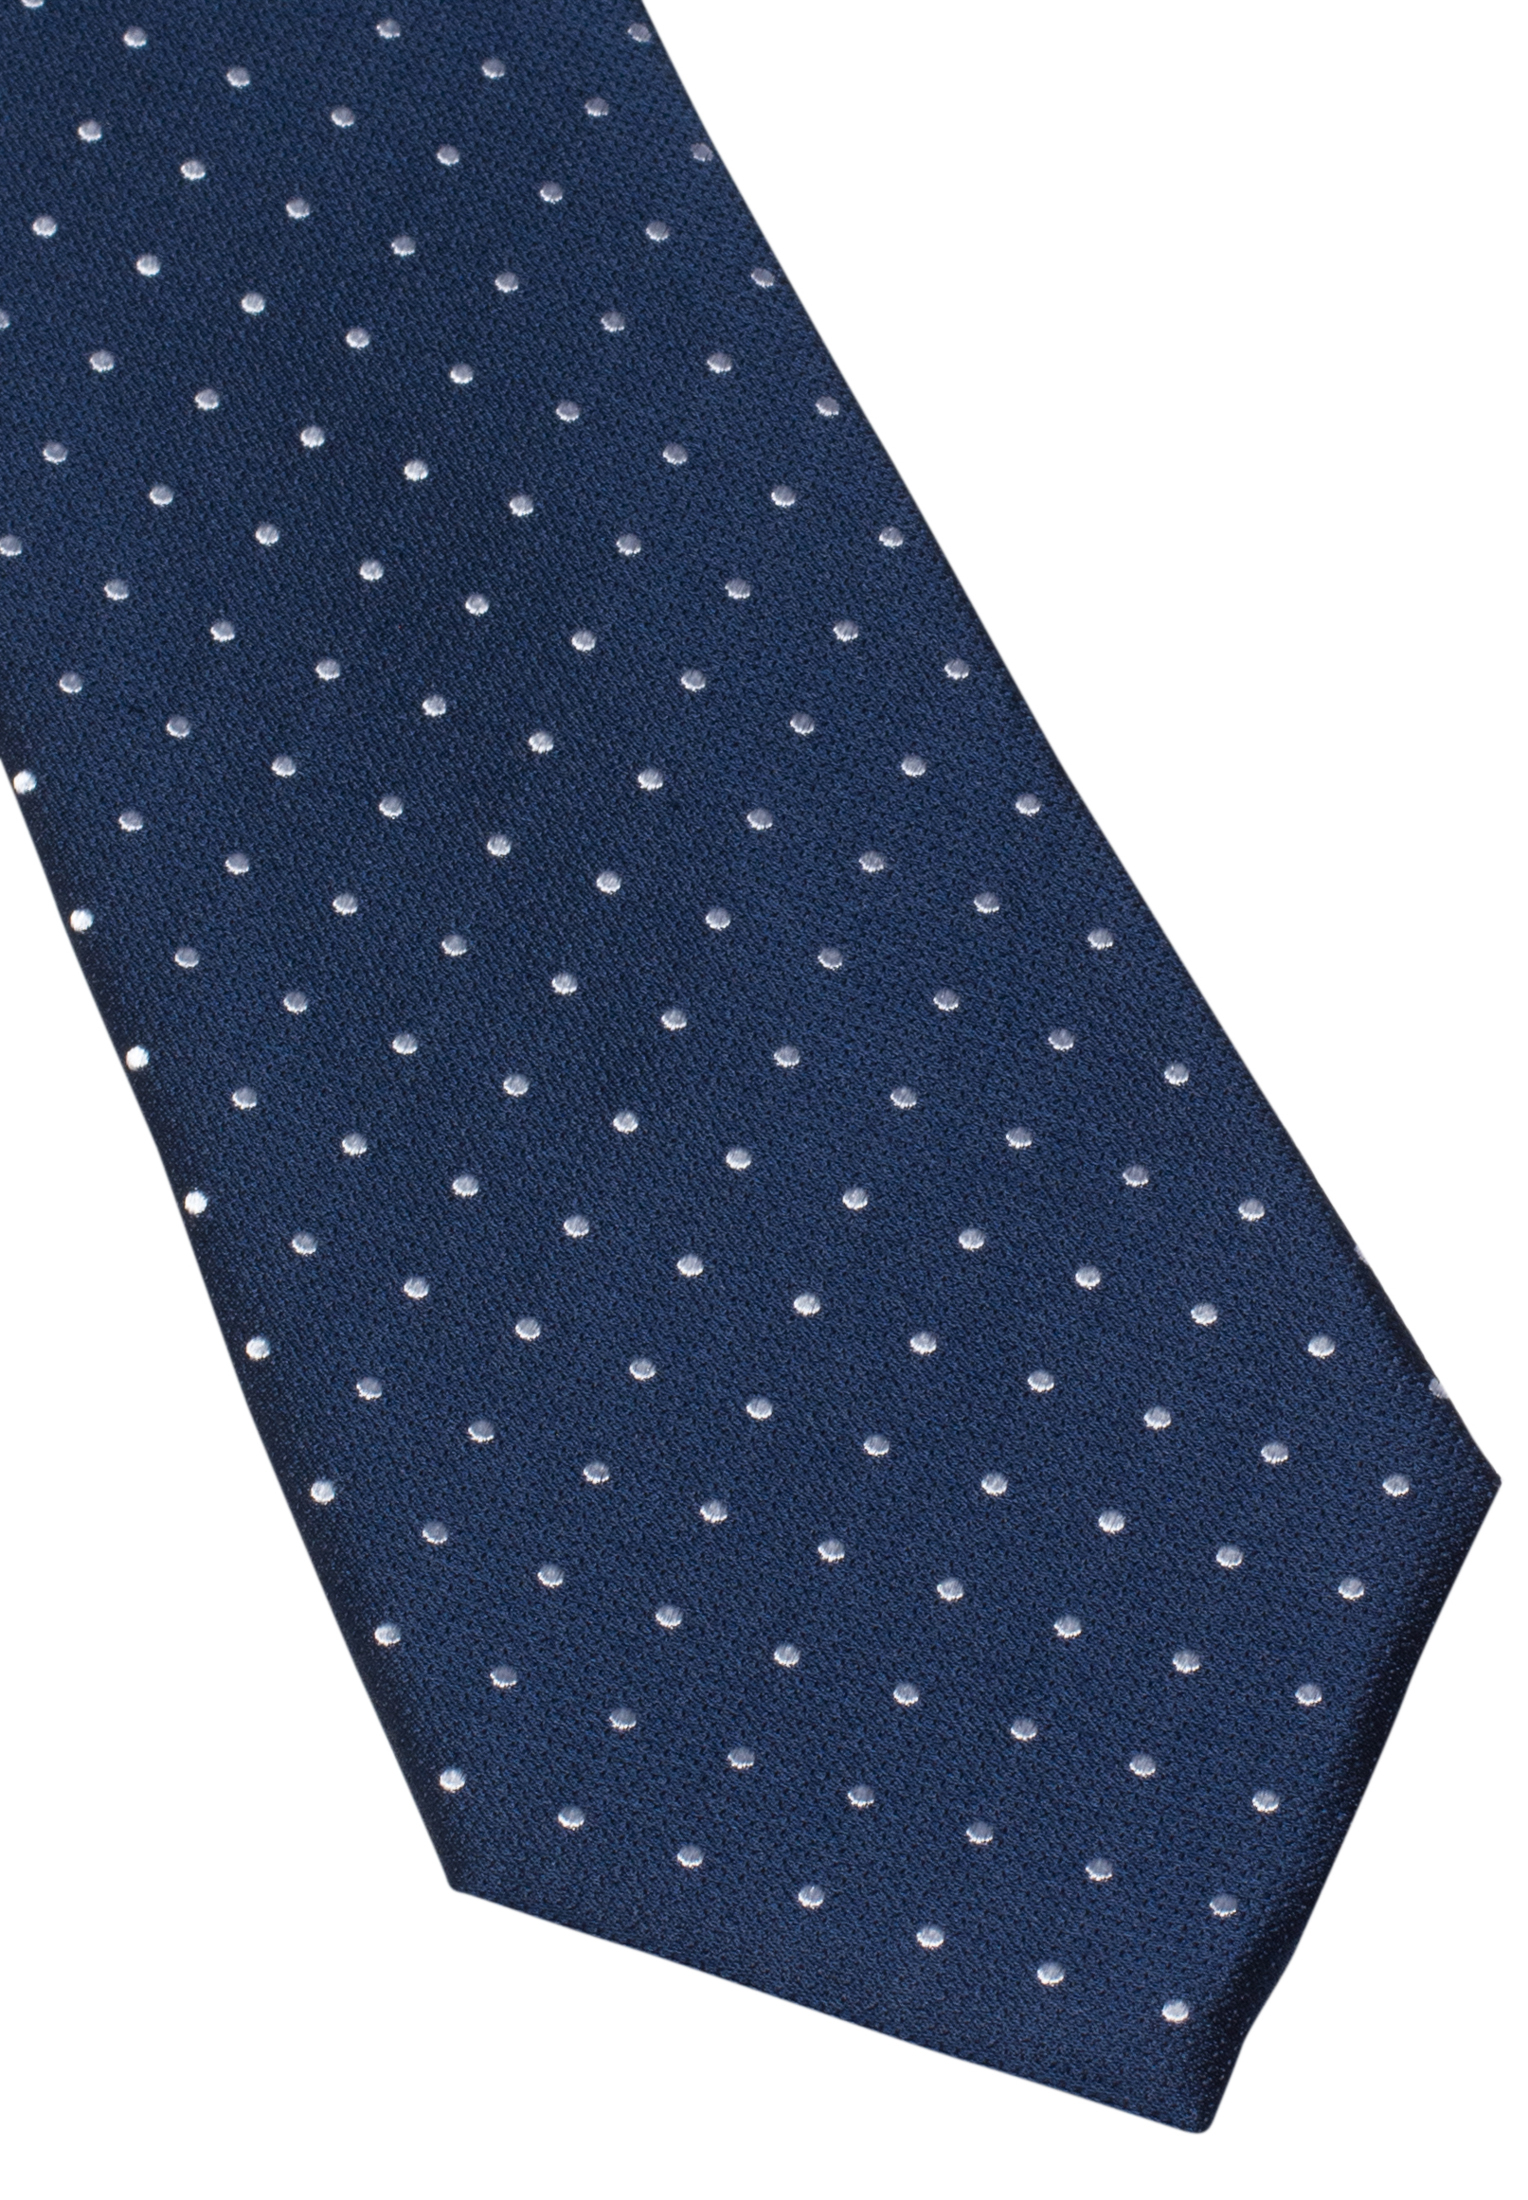 Krawatte in dunkelblau getupft | | 1AC00022-01-81-142 | dunkelblau 142